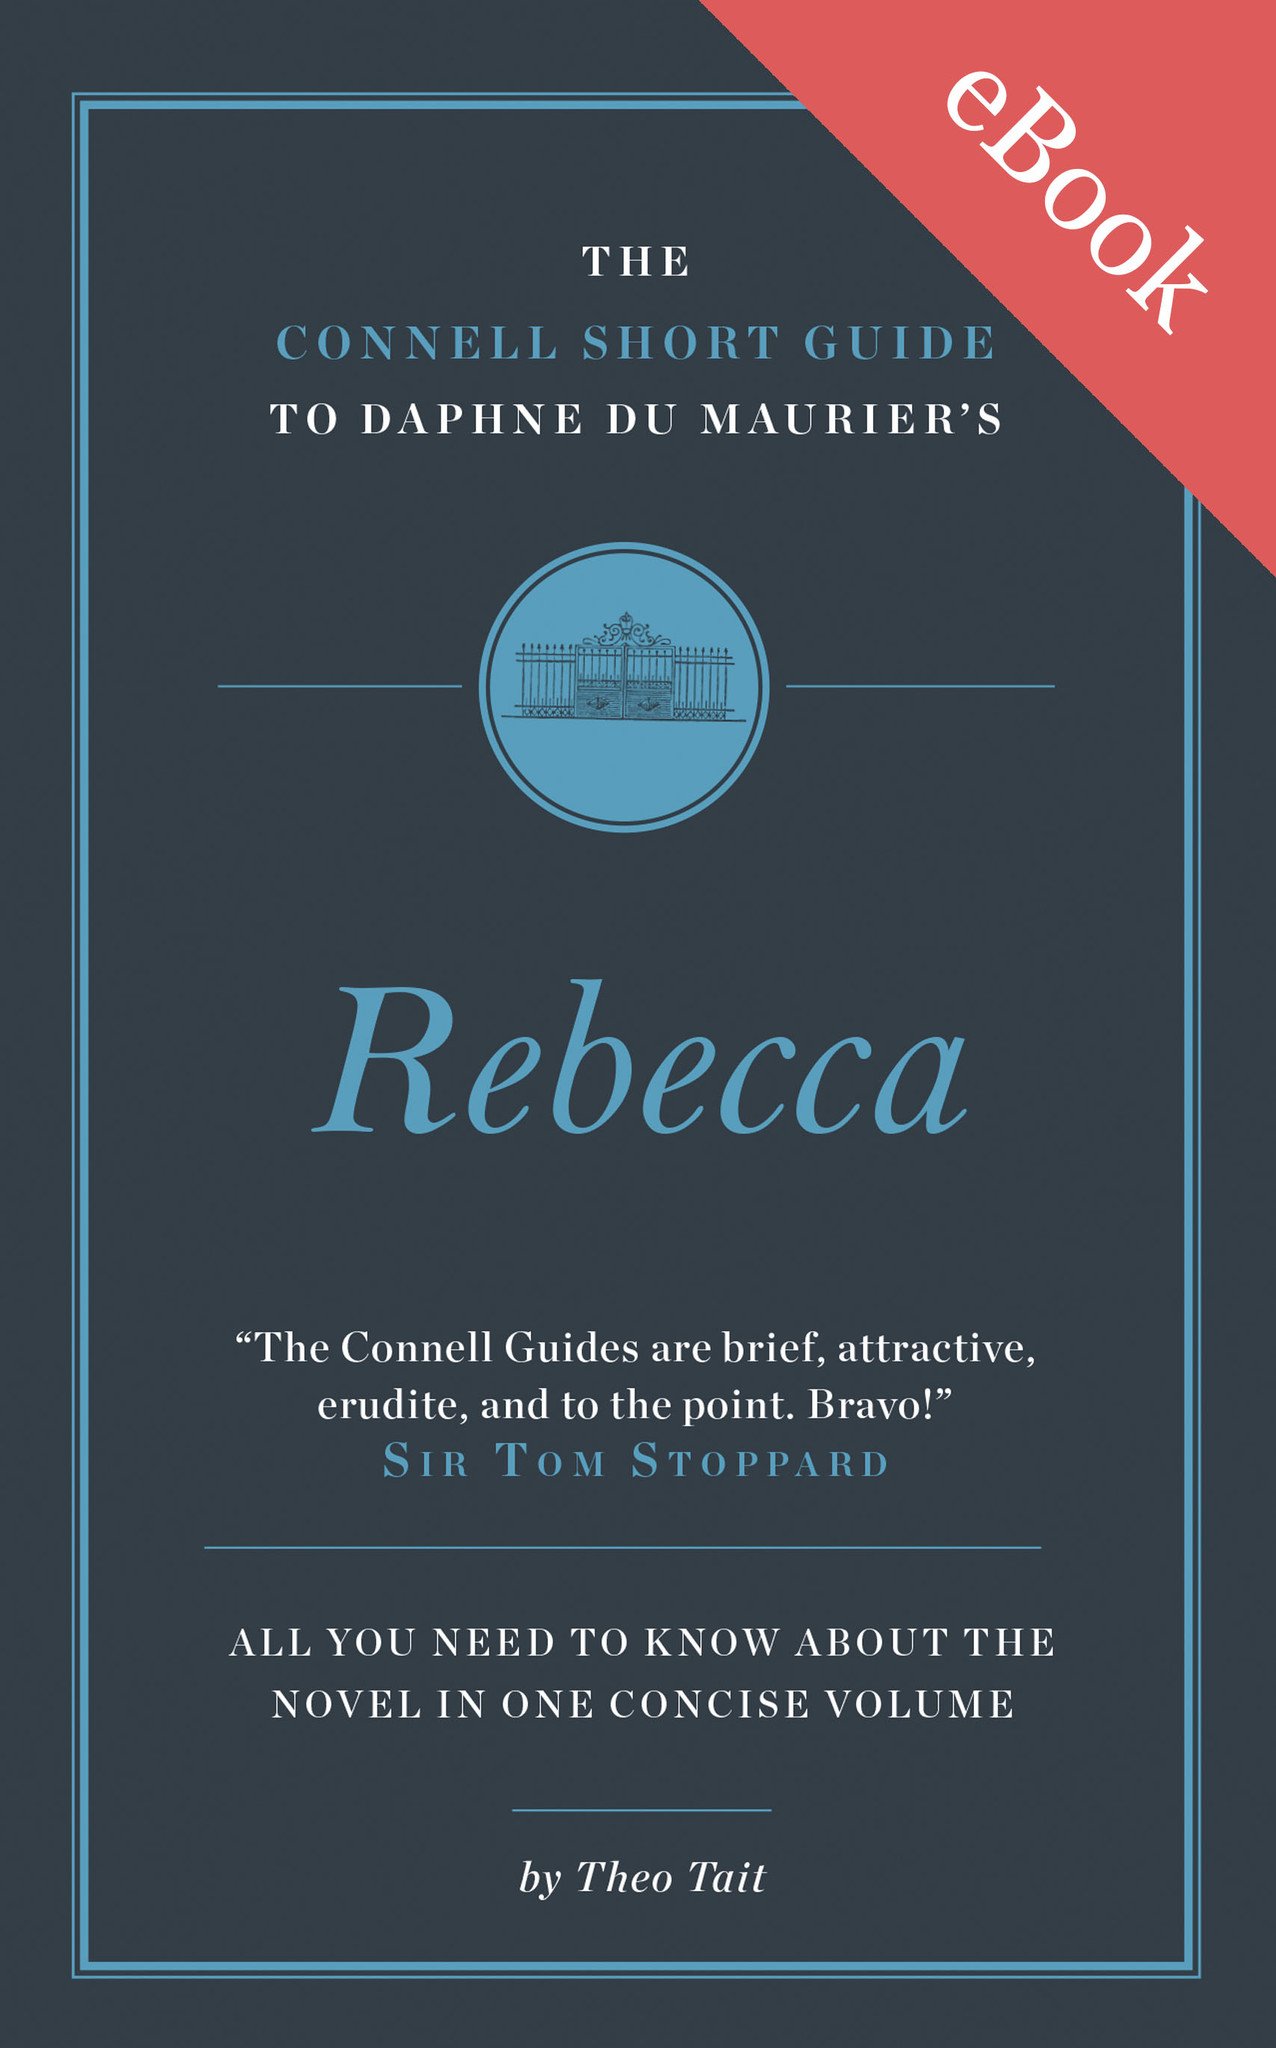 Rebecca daphne du maurier ebook free download full